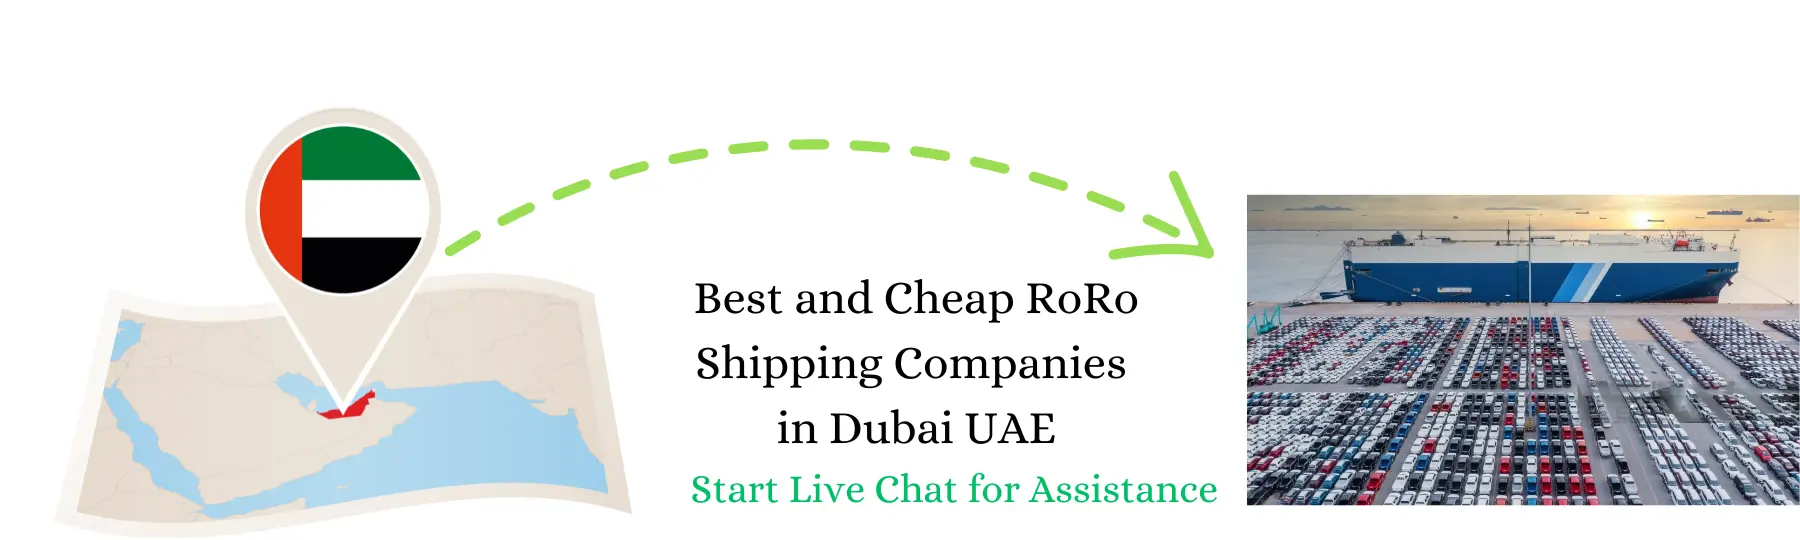 Best and Cheap RoRo Shipping Companies in Dubai UAE